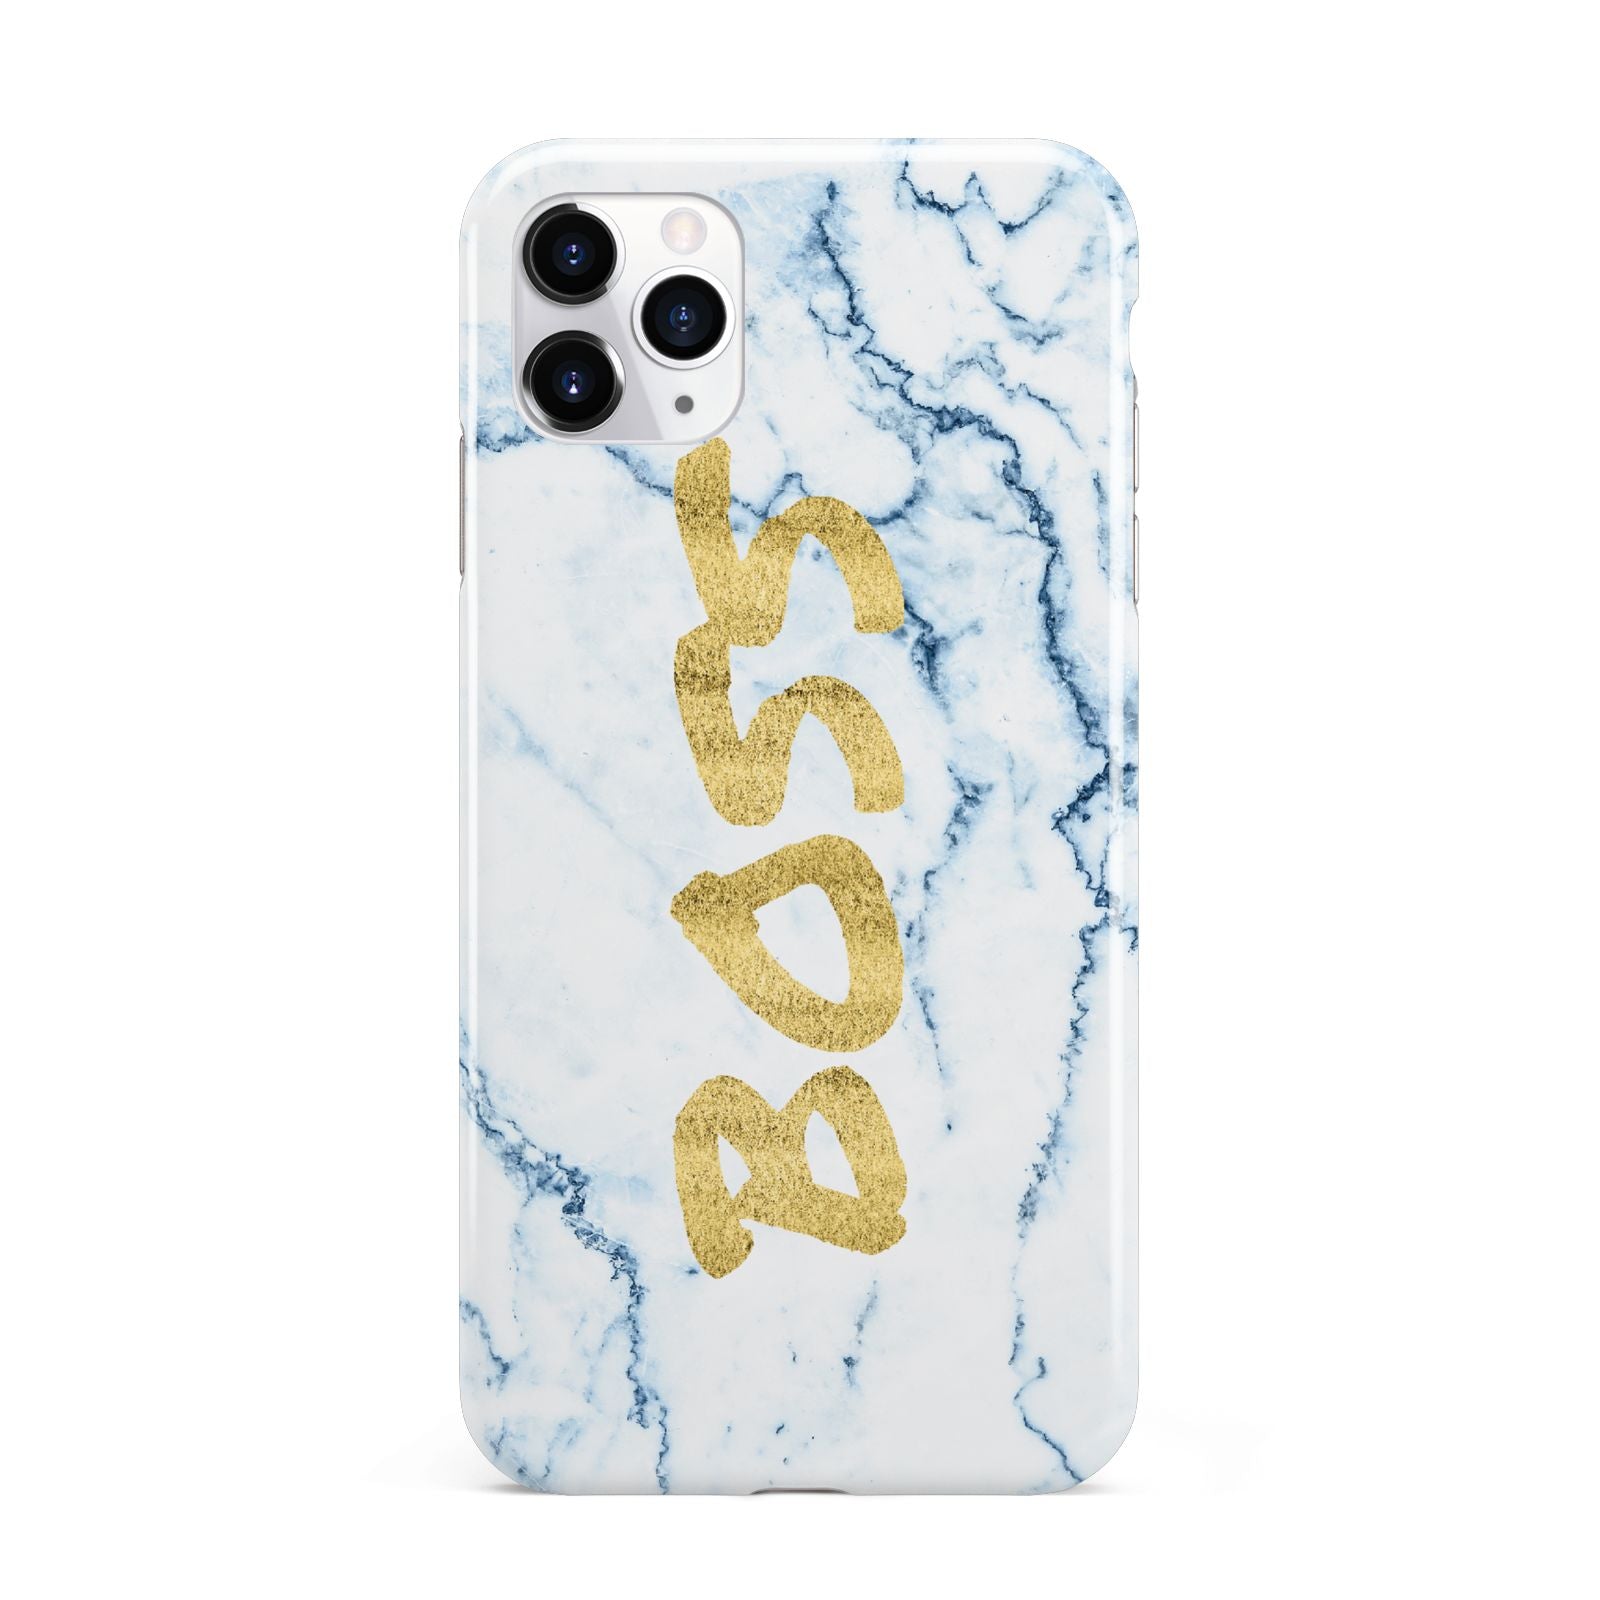 Boss Gold Blue Marble Effect iPhone 11 Pro Max 3D Tough Case